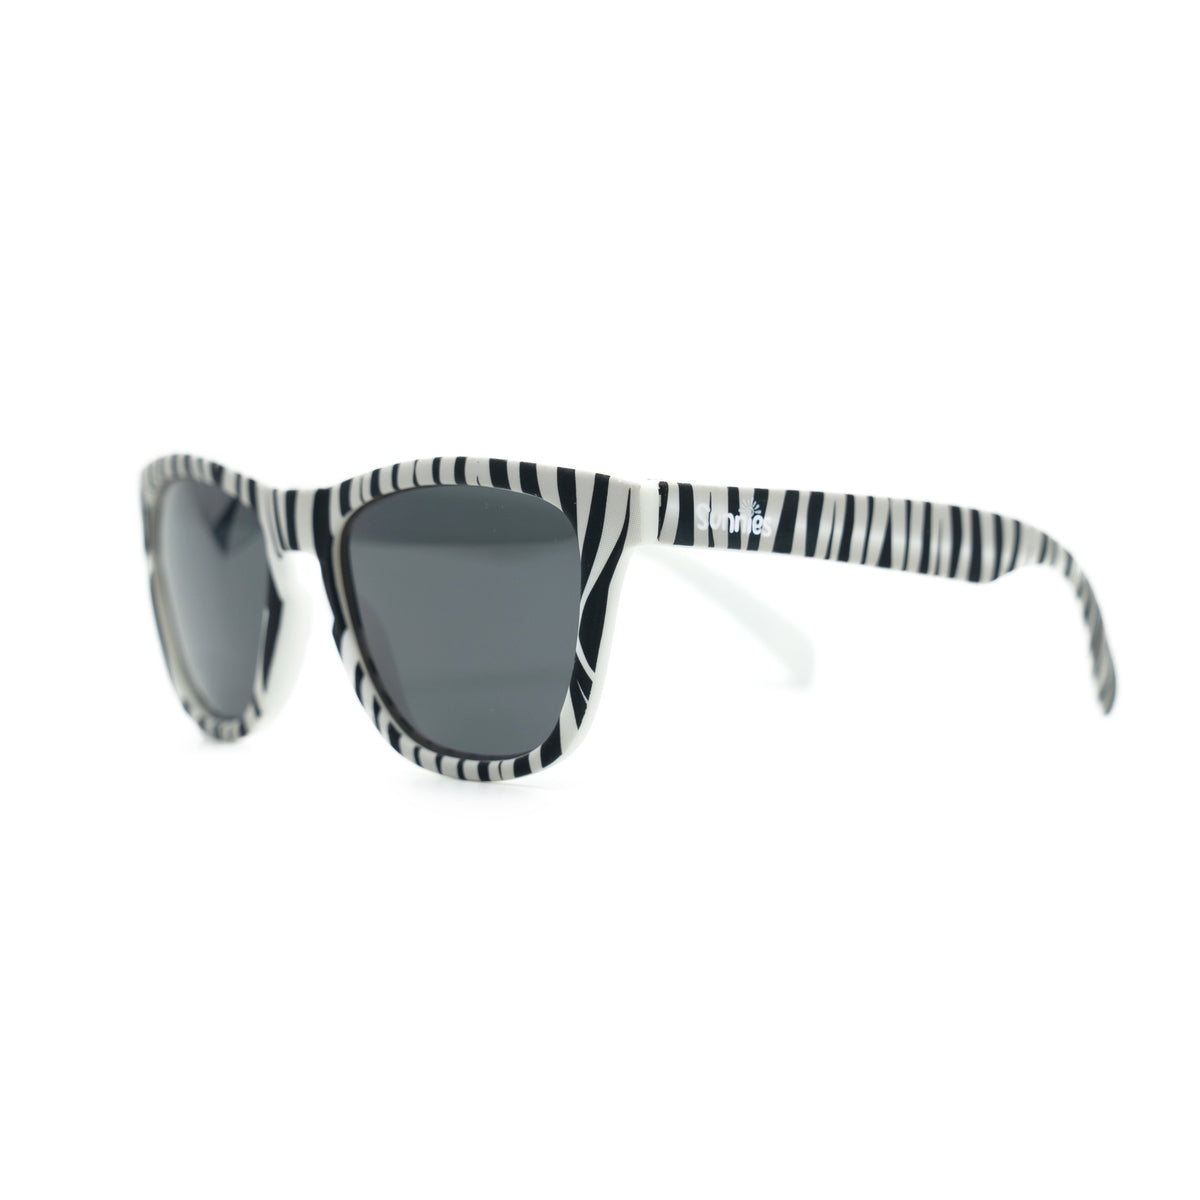 Zebra print kids sunglass with non reflective black lenses with polarized lenses and 100% UVA/UVB protection